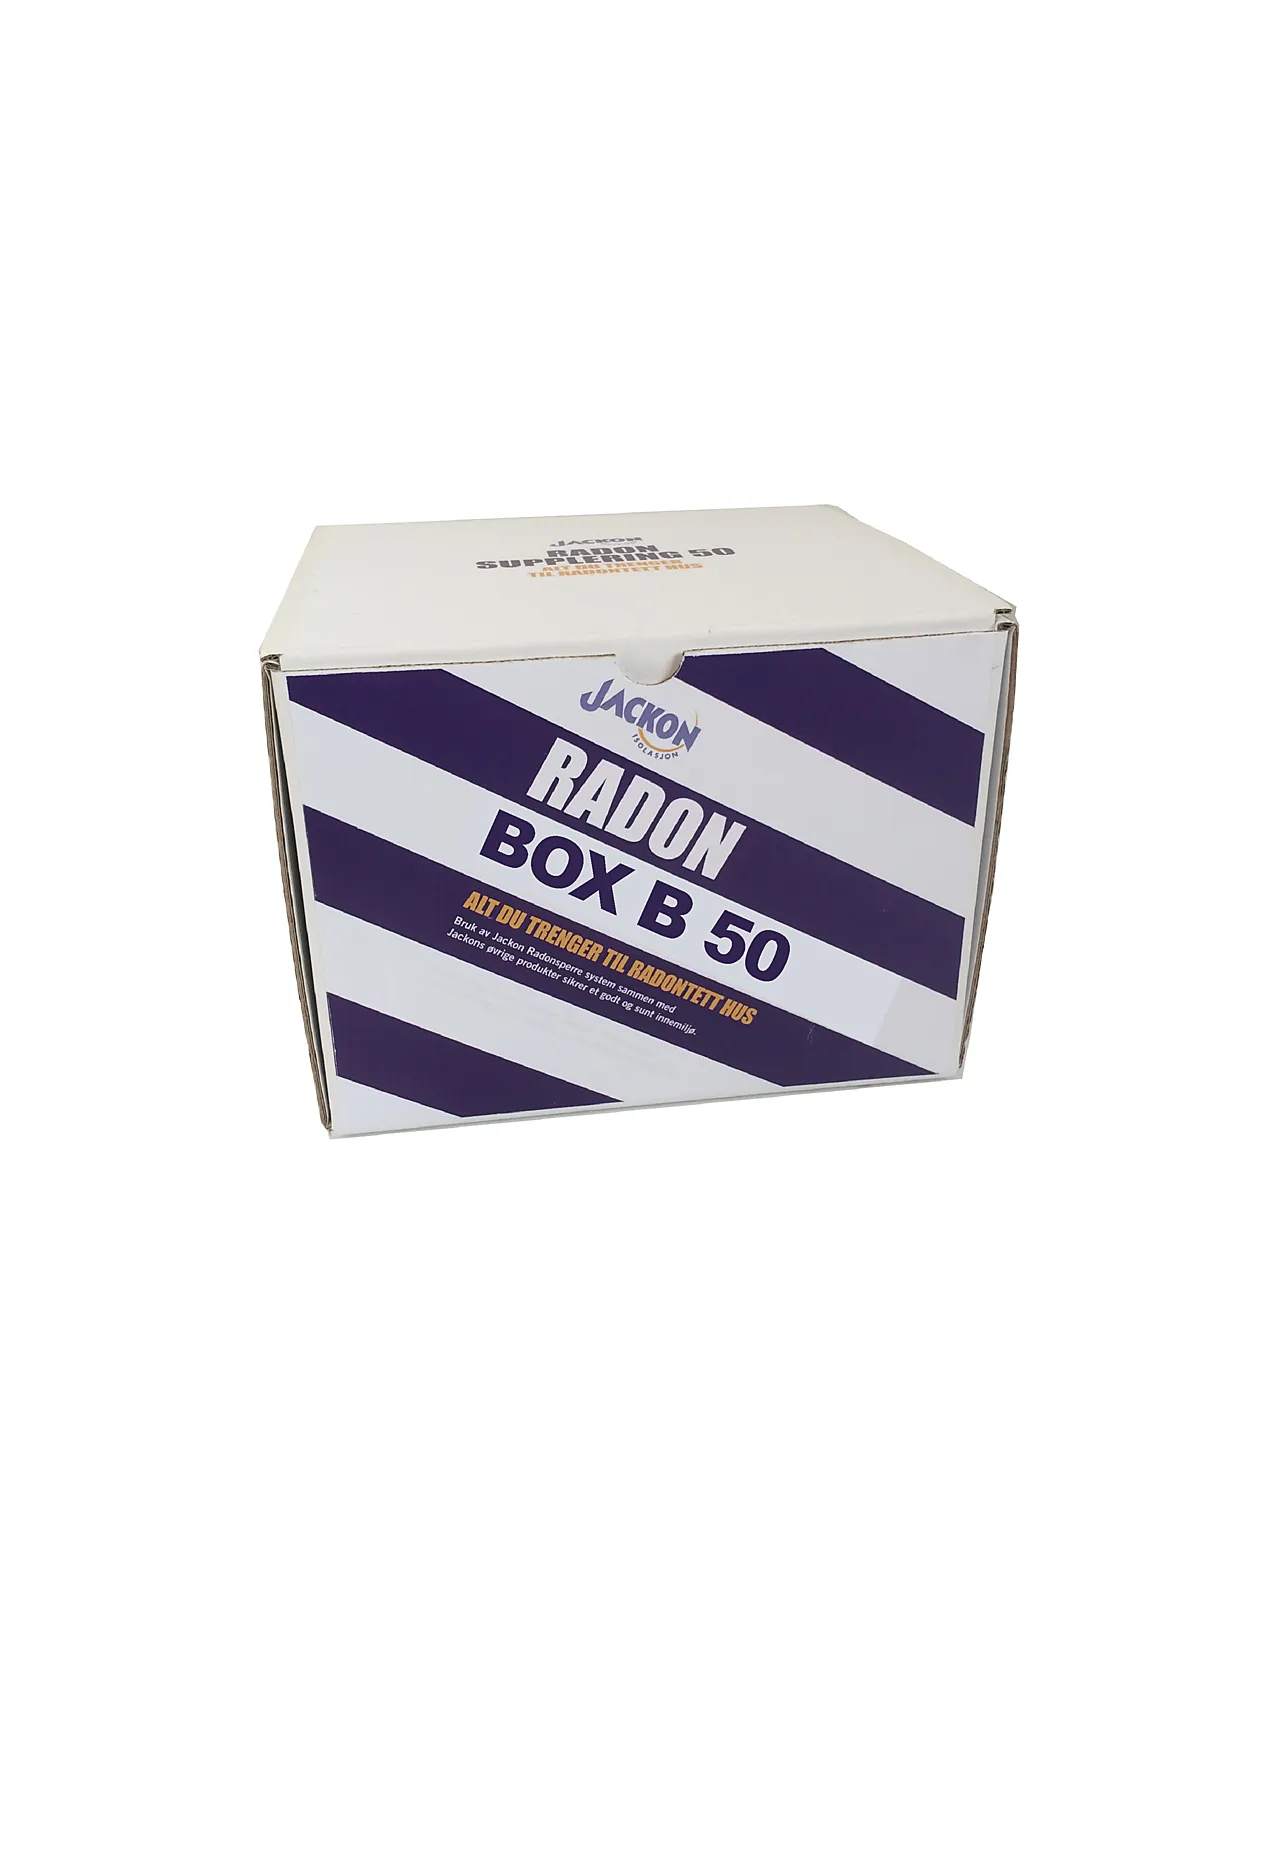 Jackon radon box b 50